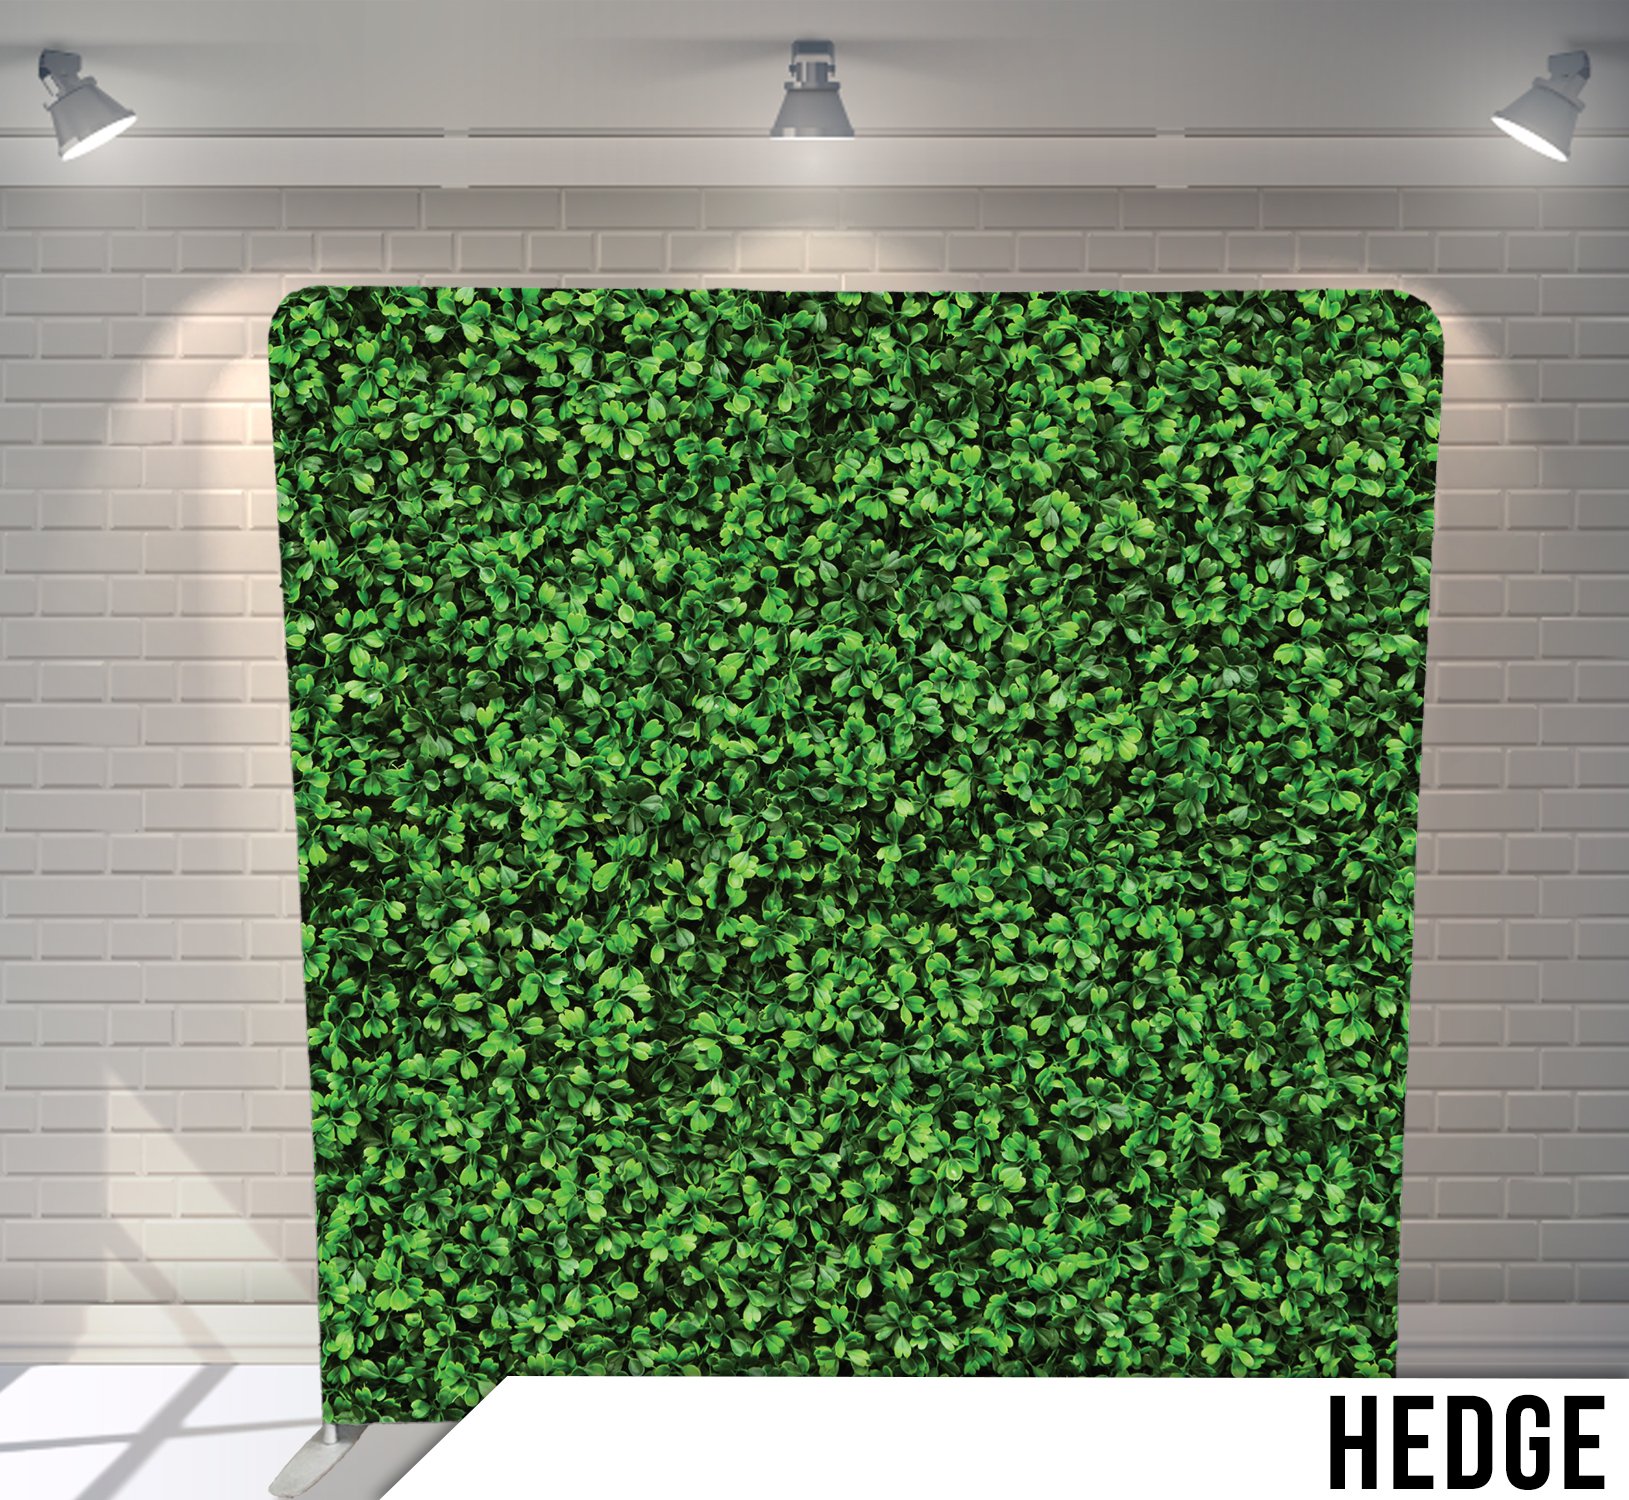 Hedge.jpg